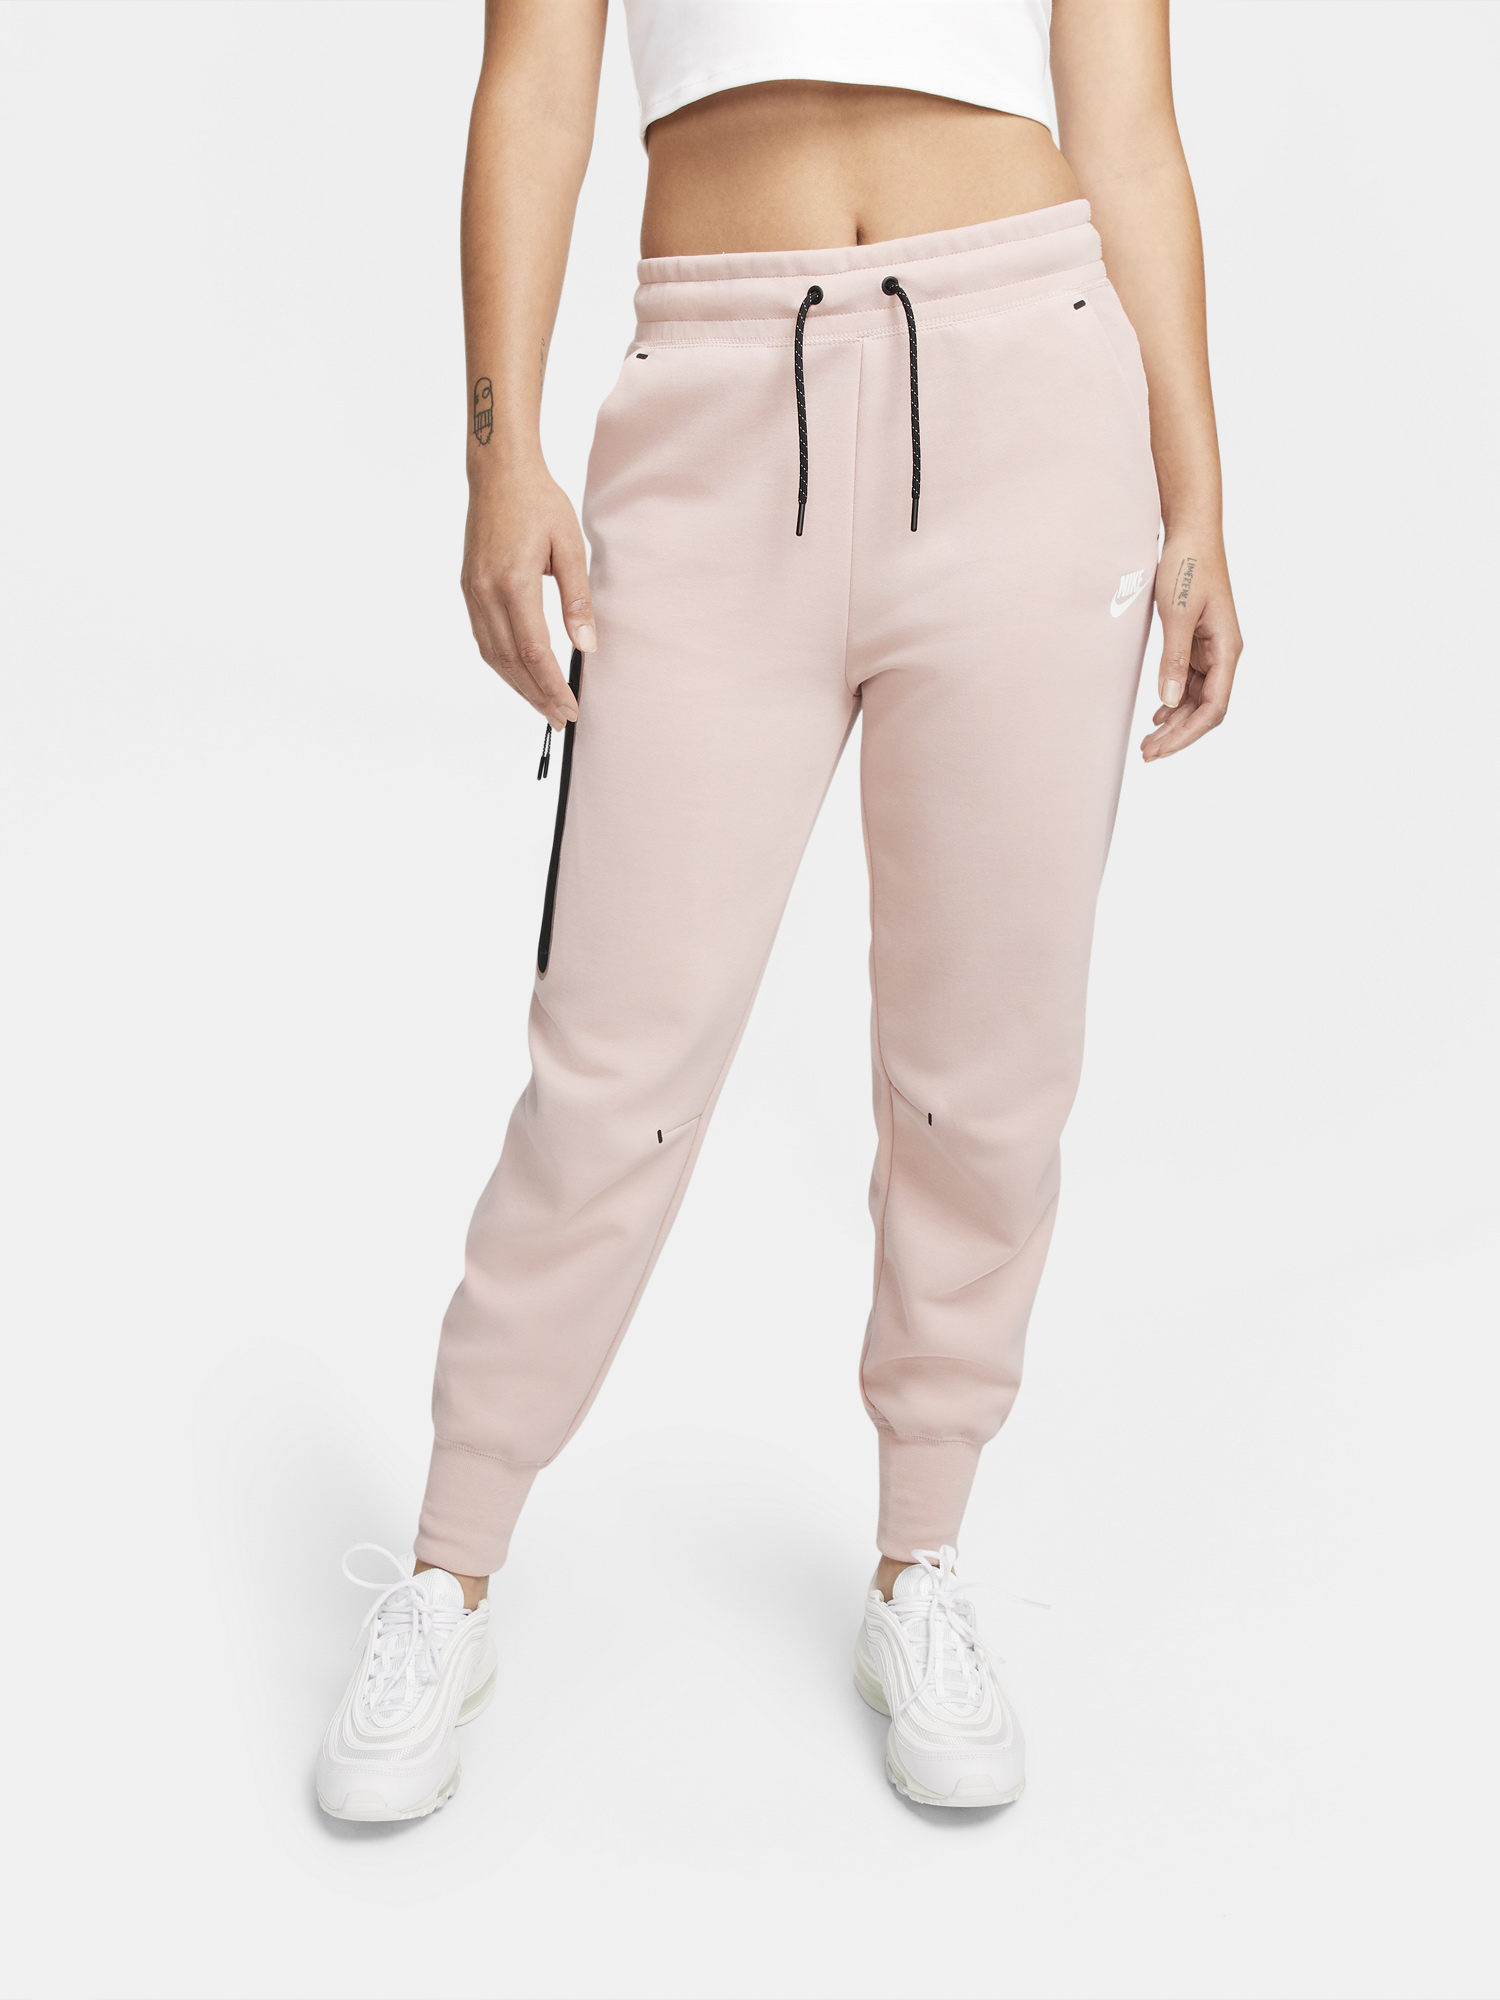 nike-womens-tech-fleece-pink-pants